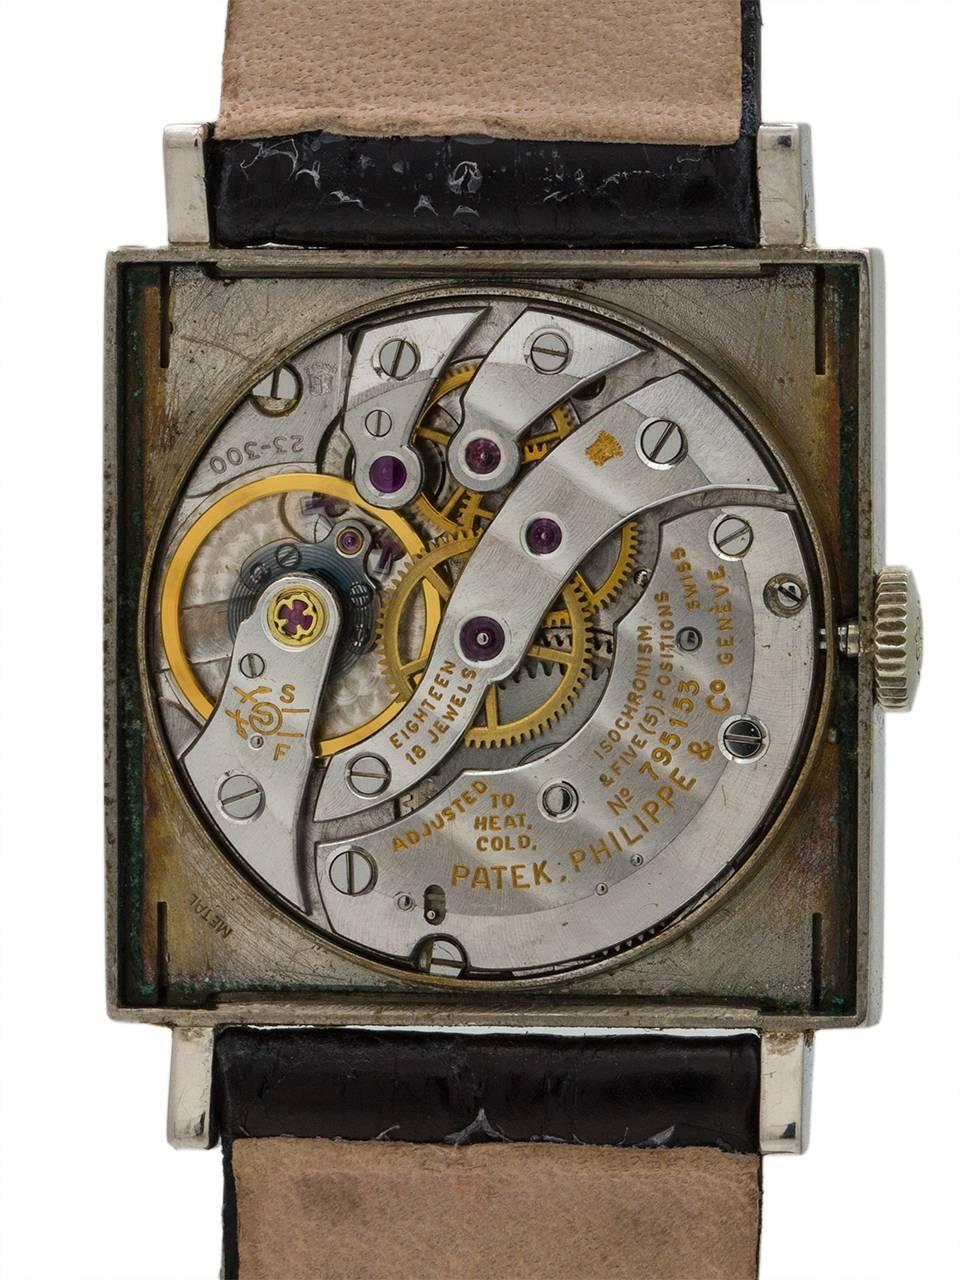 Men's Patek Philippe White Gold Manual Wind Wristwatch Ref 3430, circa 1967